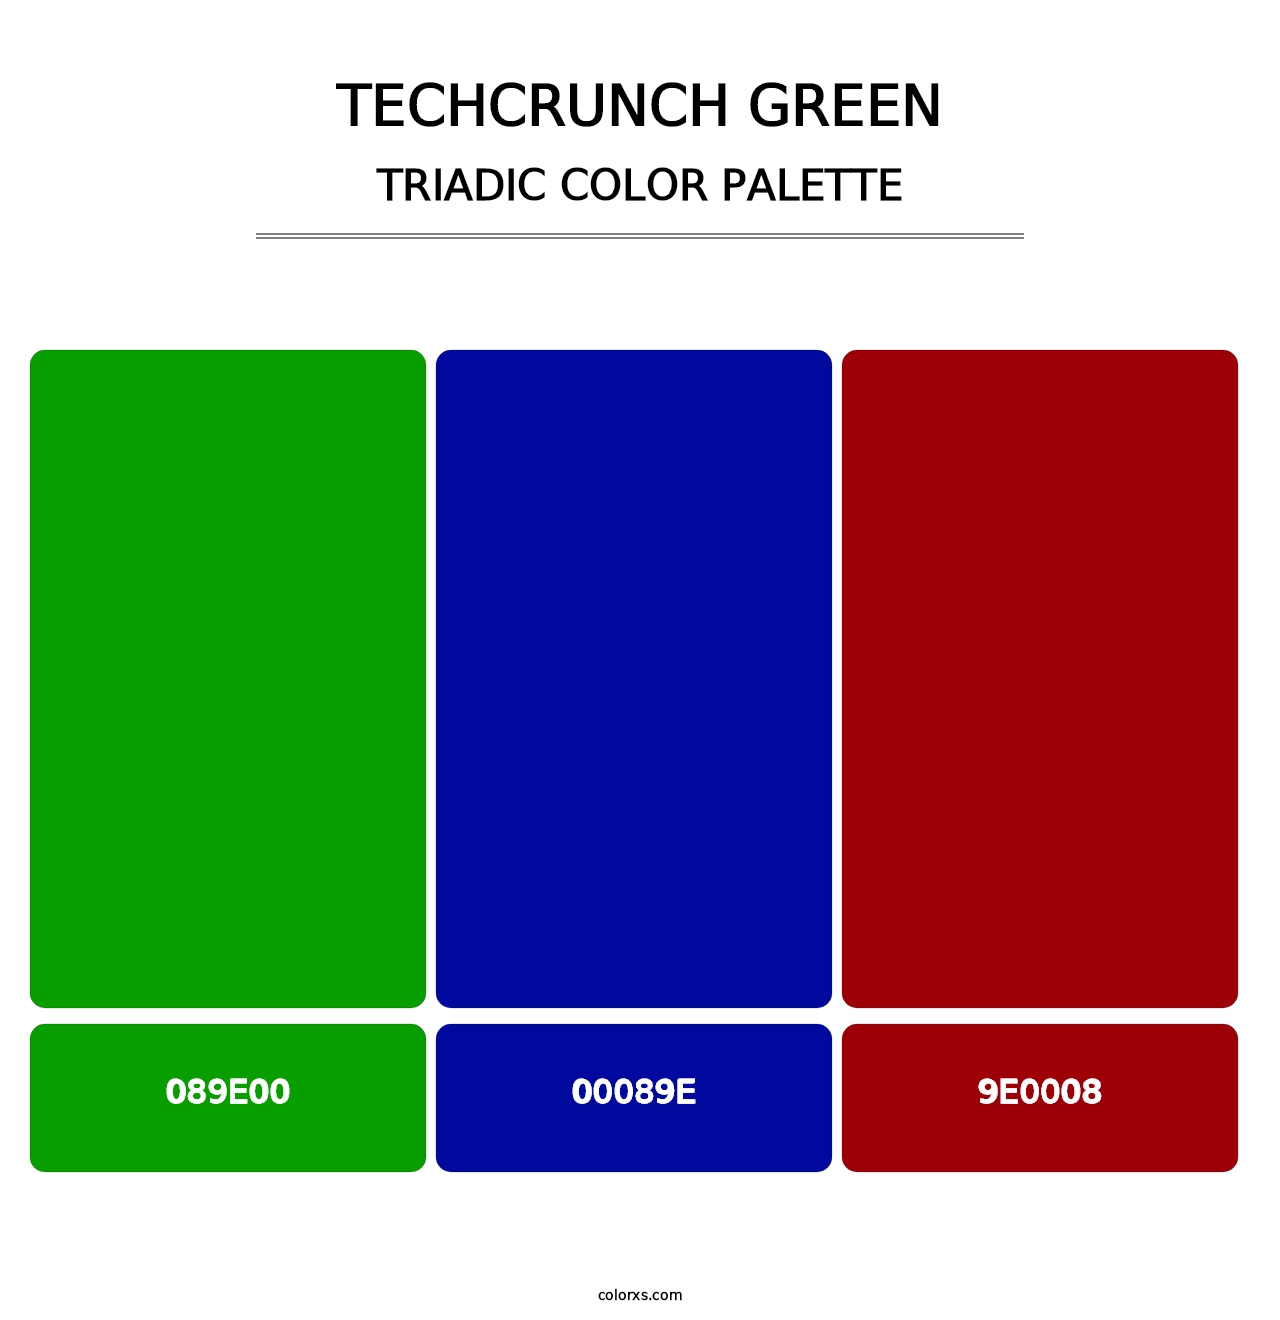 TechCrunch Green - Triadic Color Palette